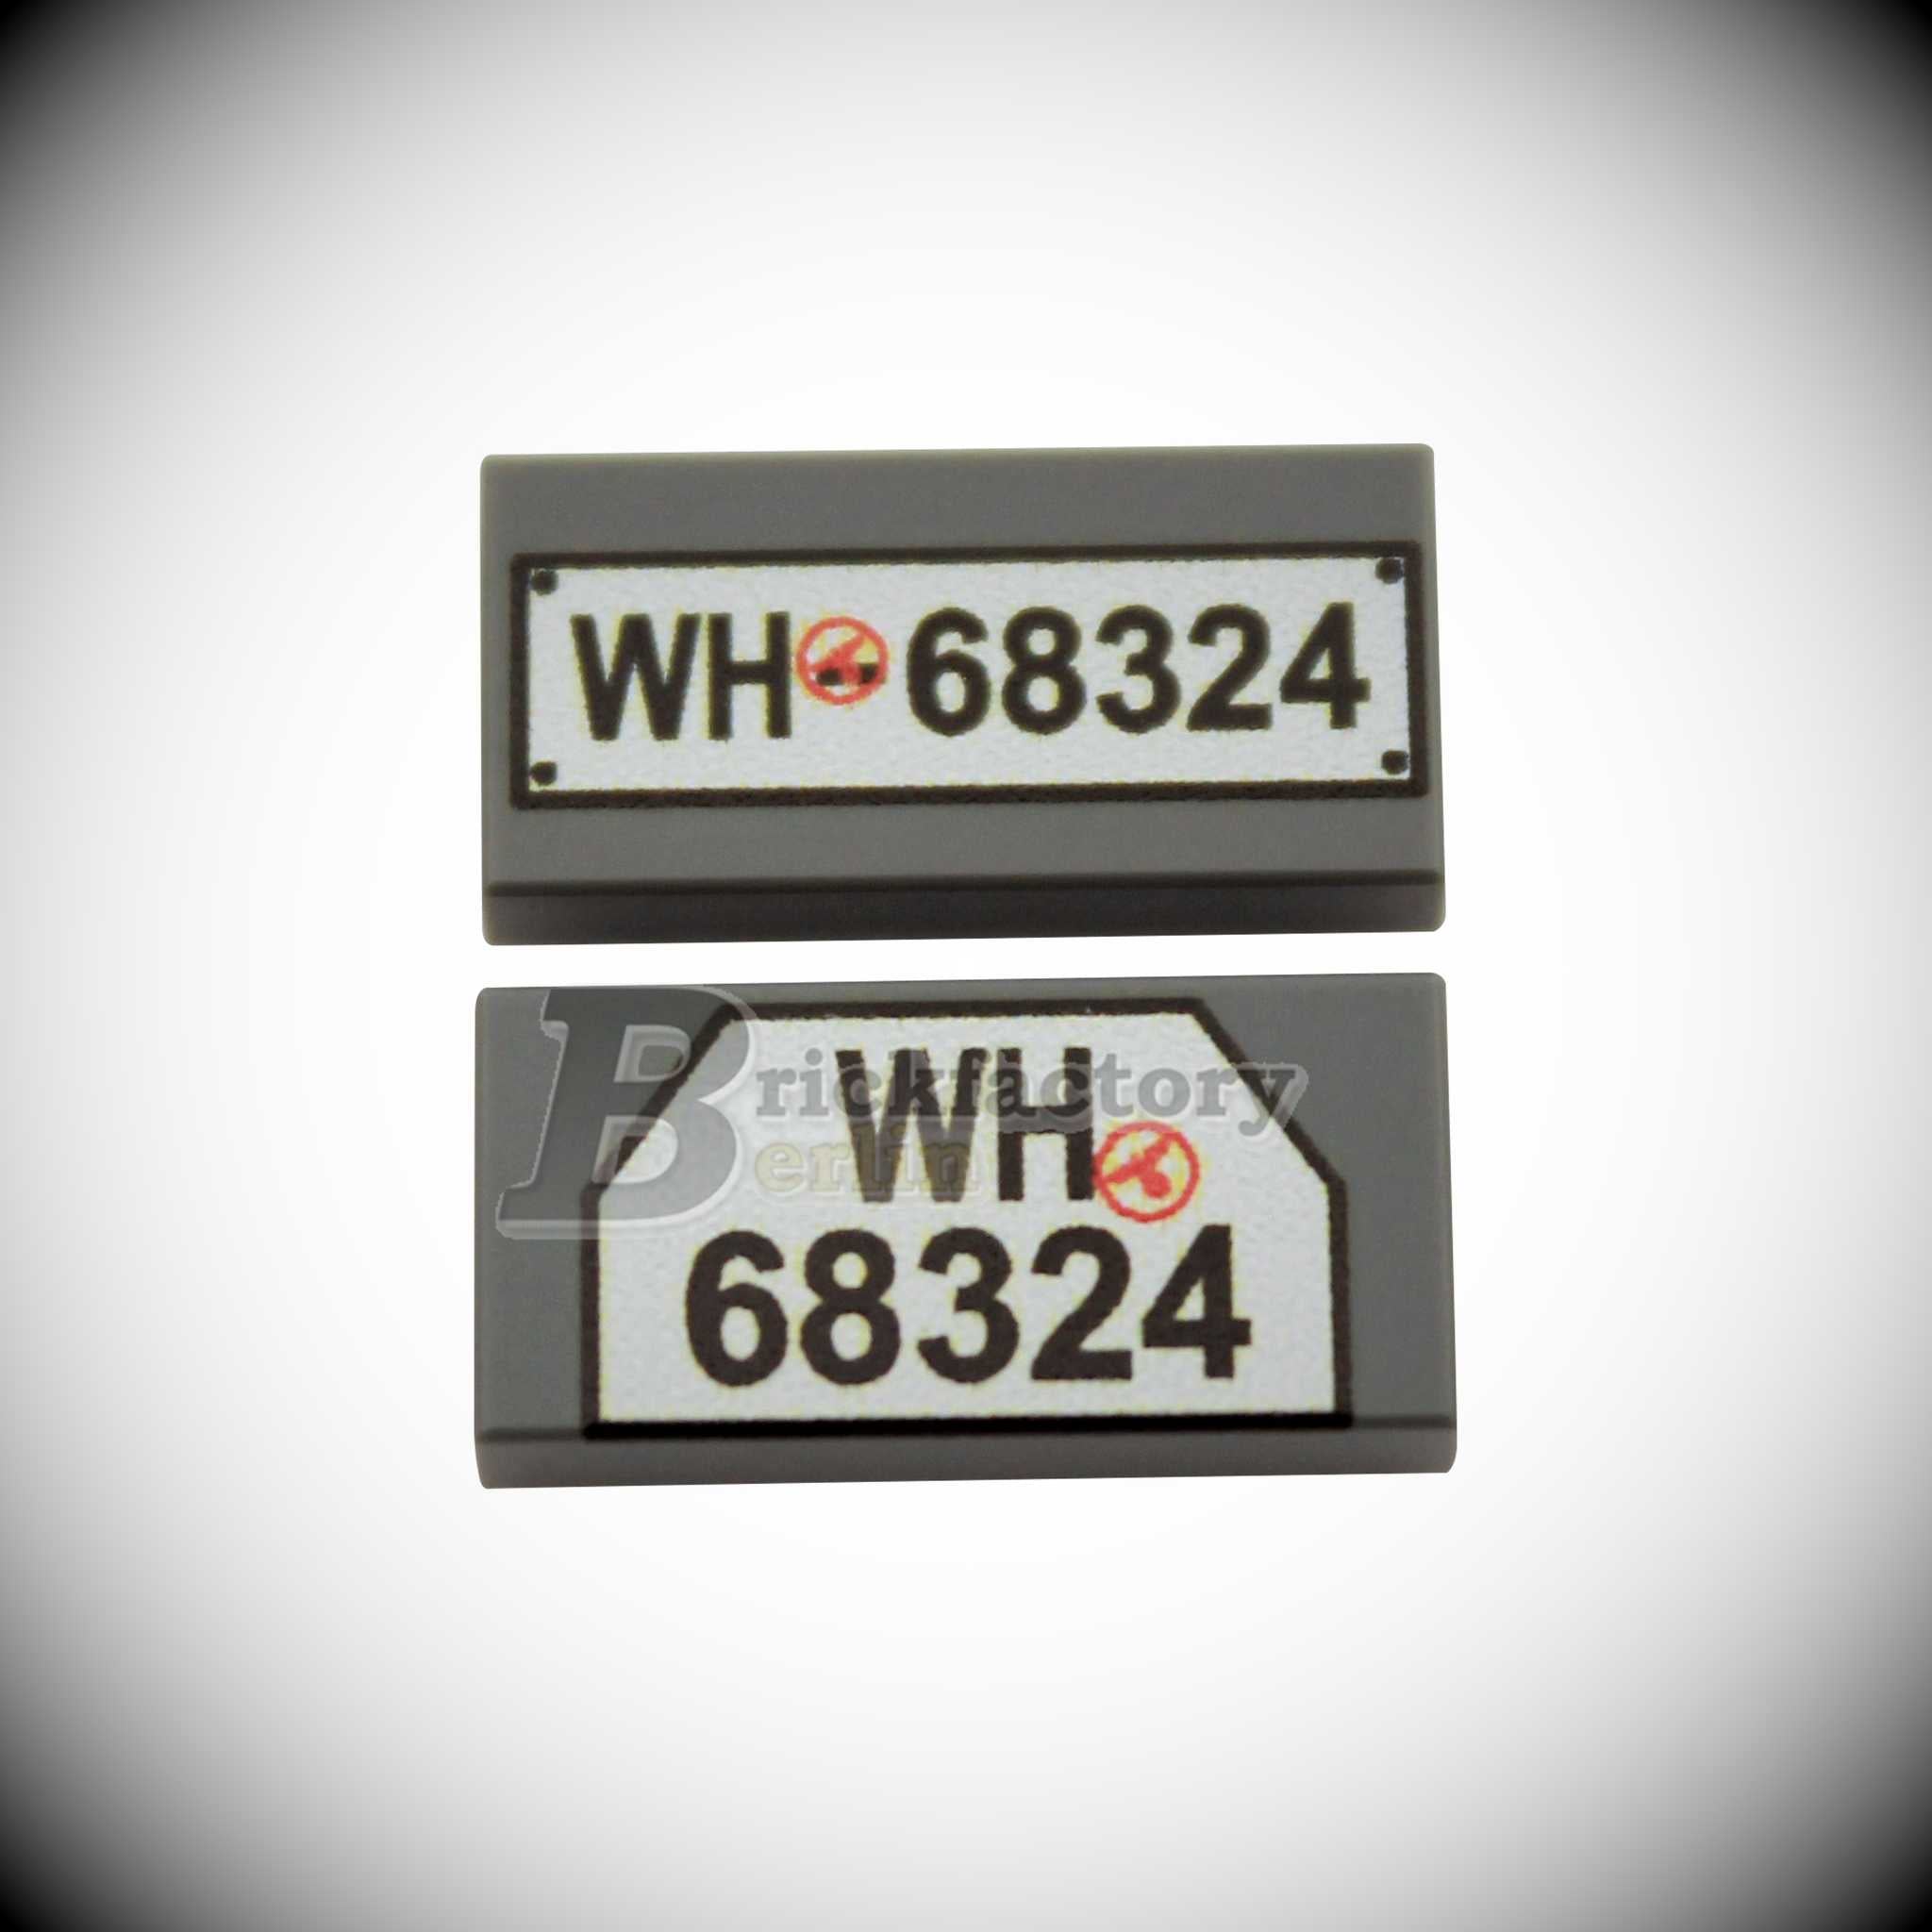 BF-0363D - Nummernschilder Set-4 2er-Pack (Farbe: Dunkelgrau) Bedruckte LEGO®-Fliesen-1x2